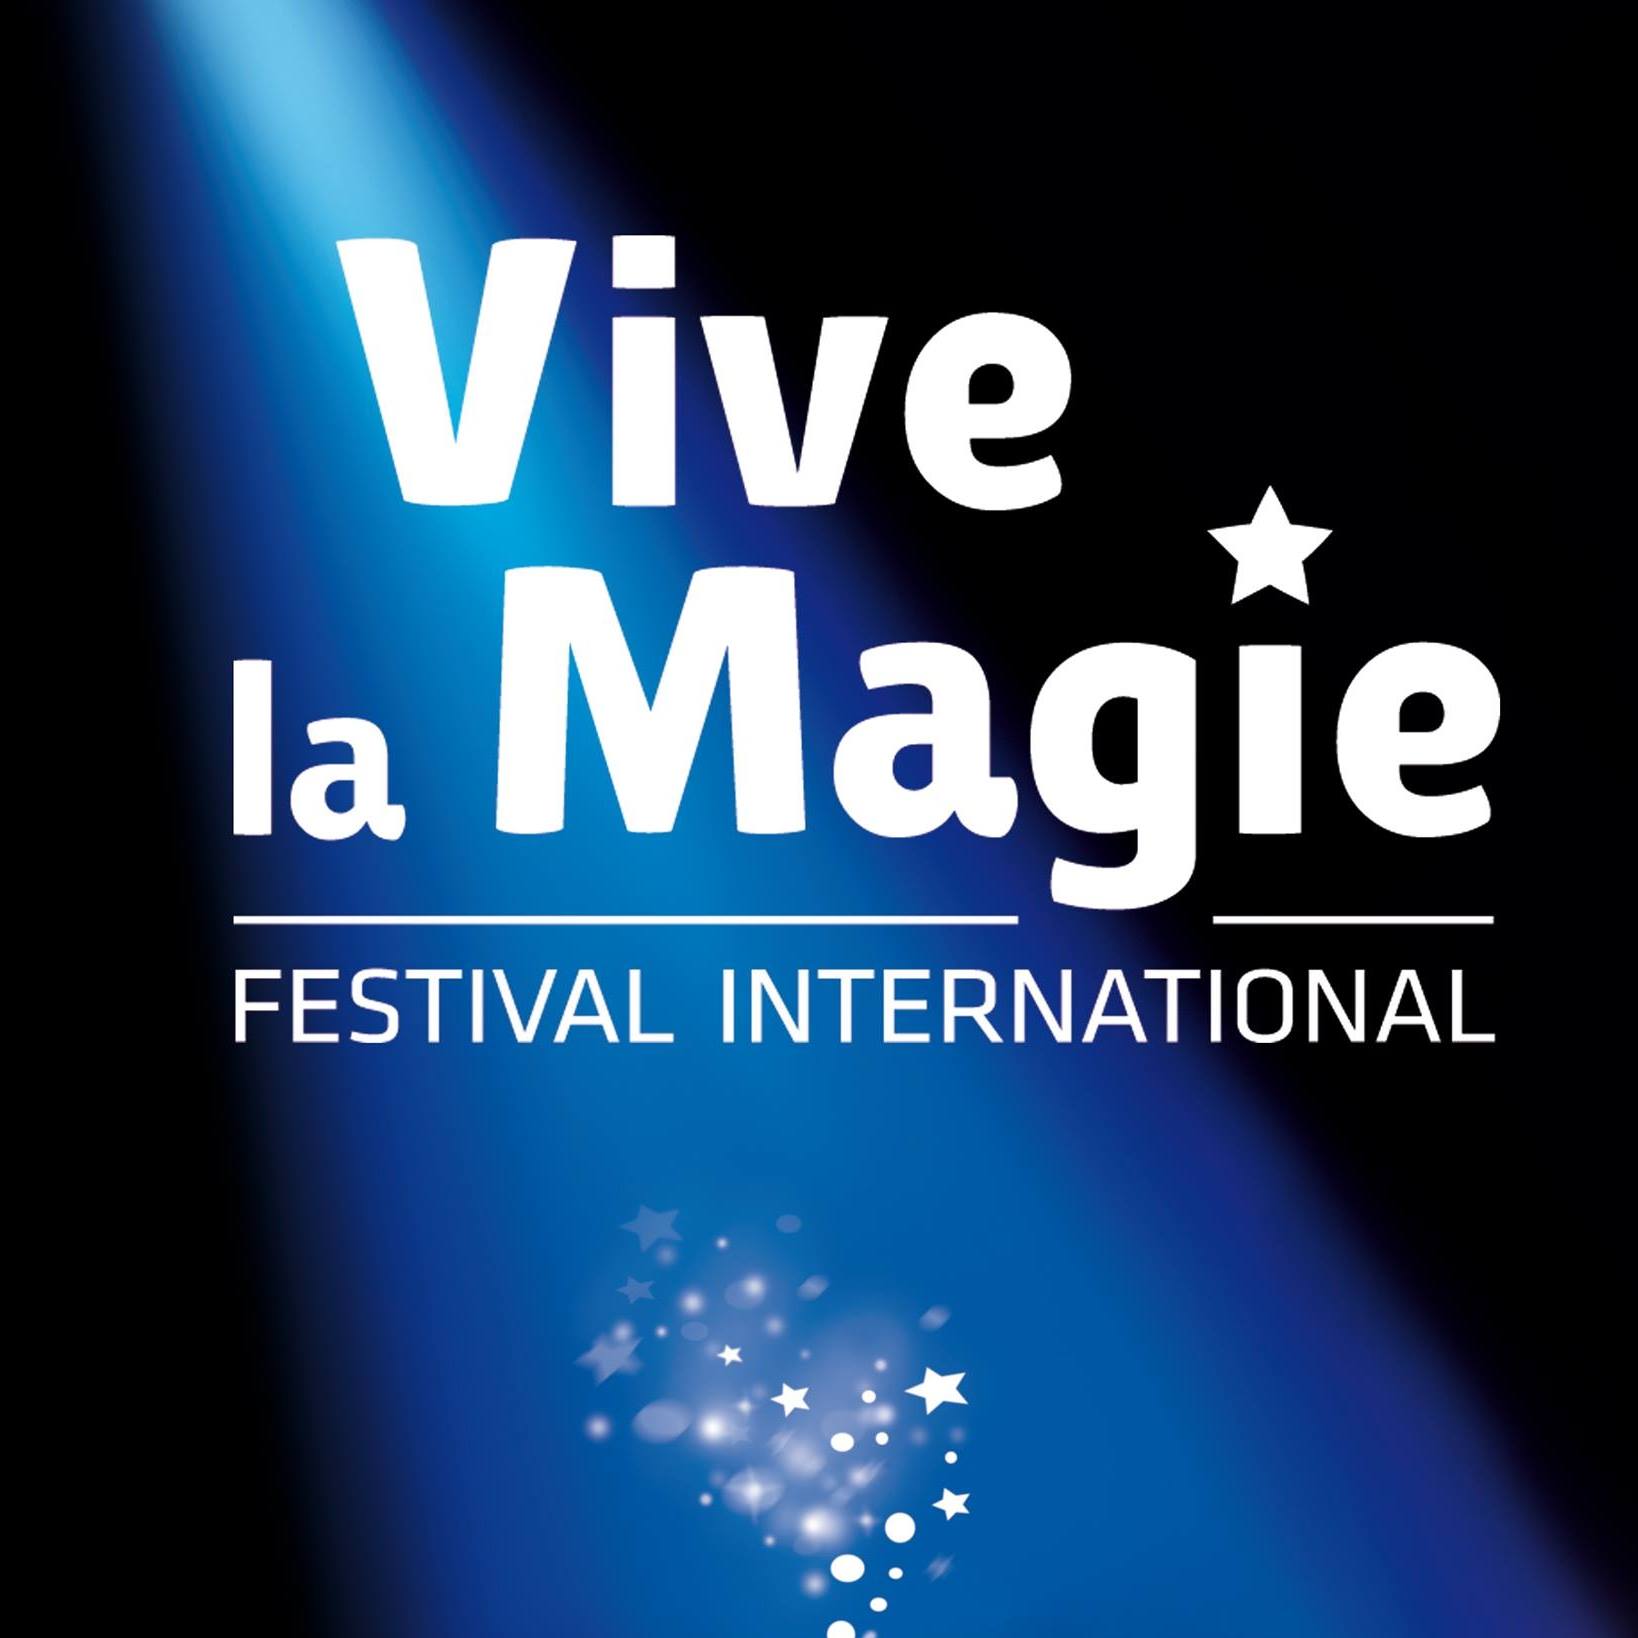 Festival International Vive La Magie 16eme Edition al Atlantia Tickets